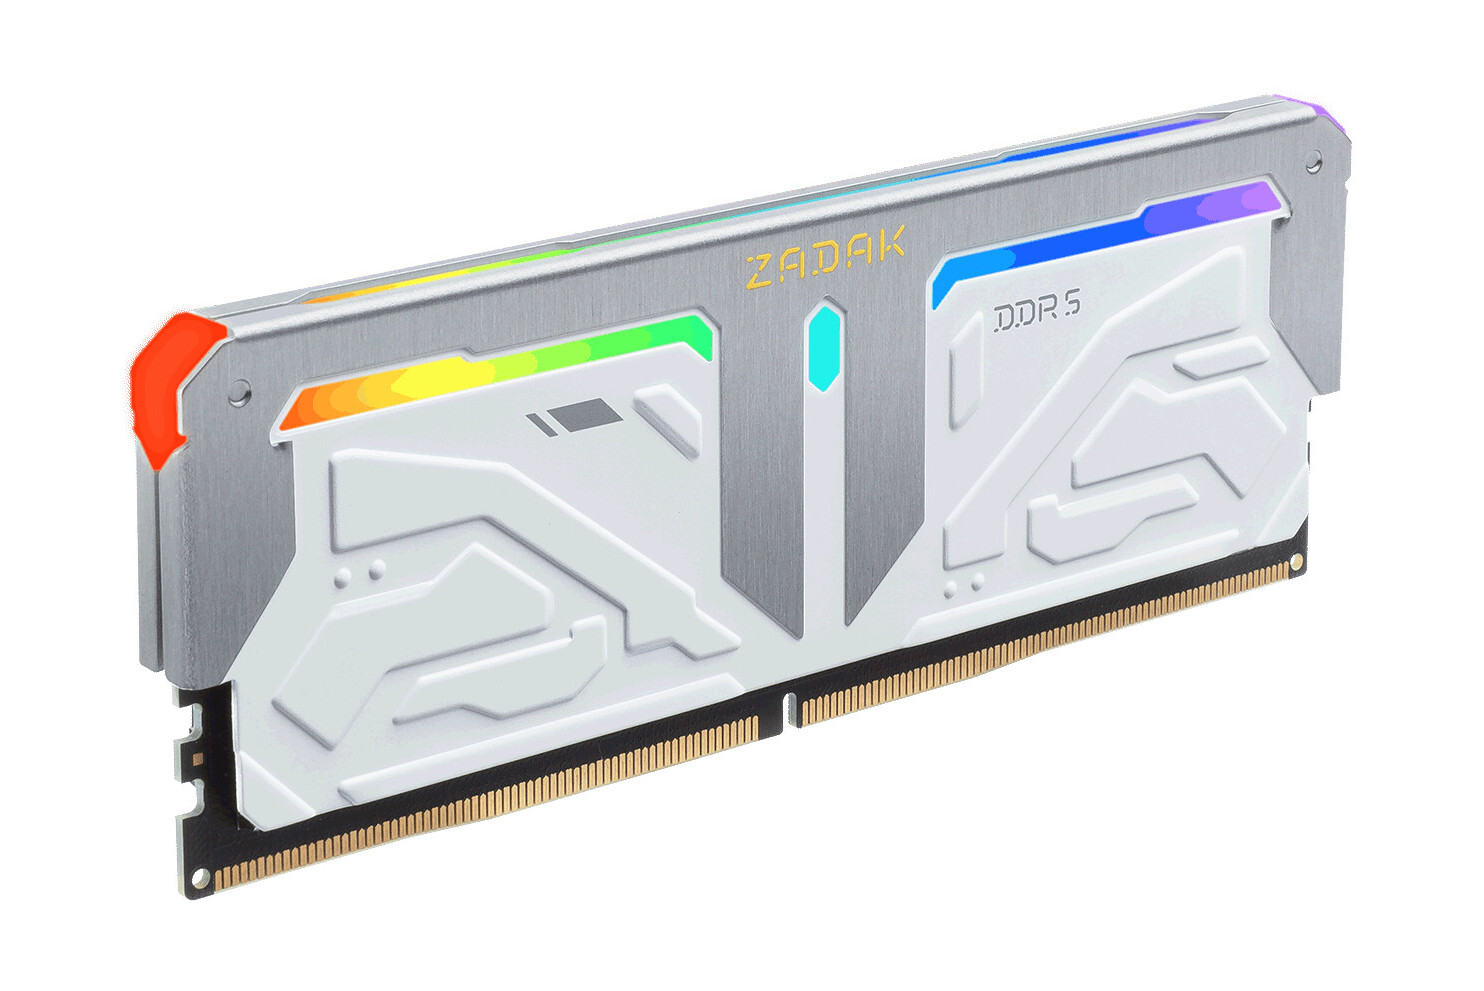 ZADAK Announces the Spark RGB DDR5 Memory